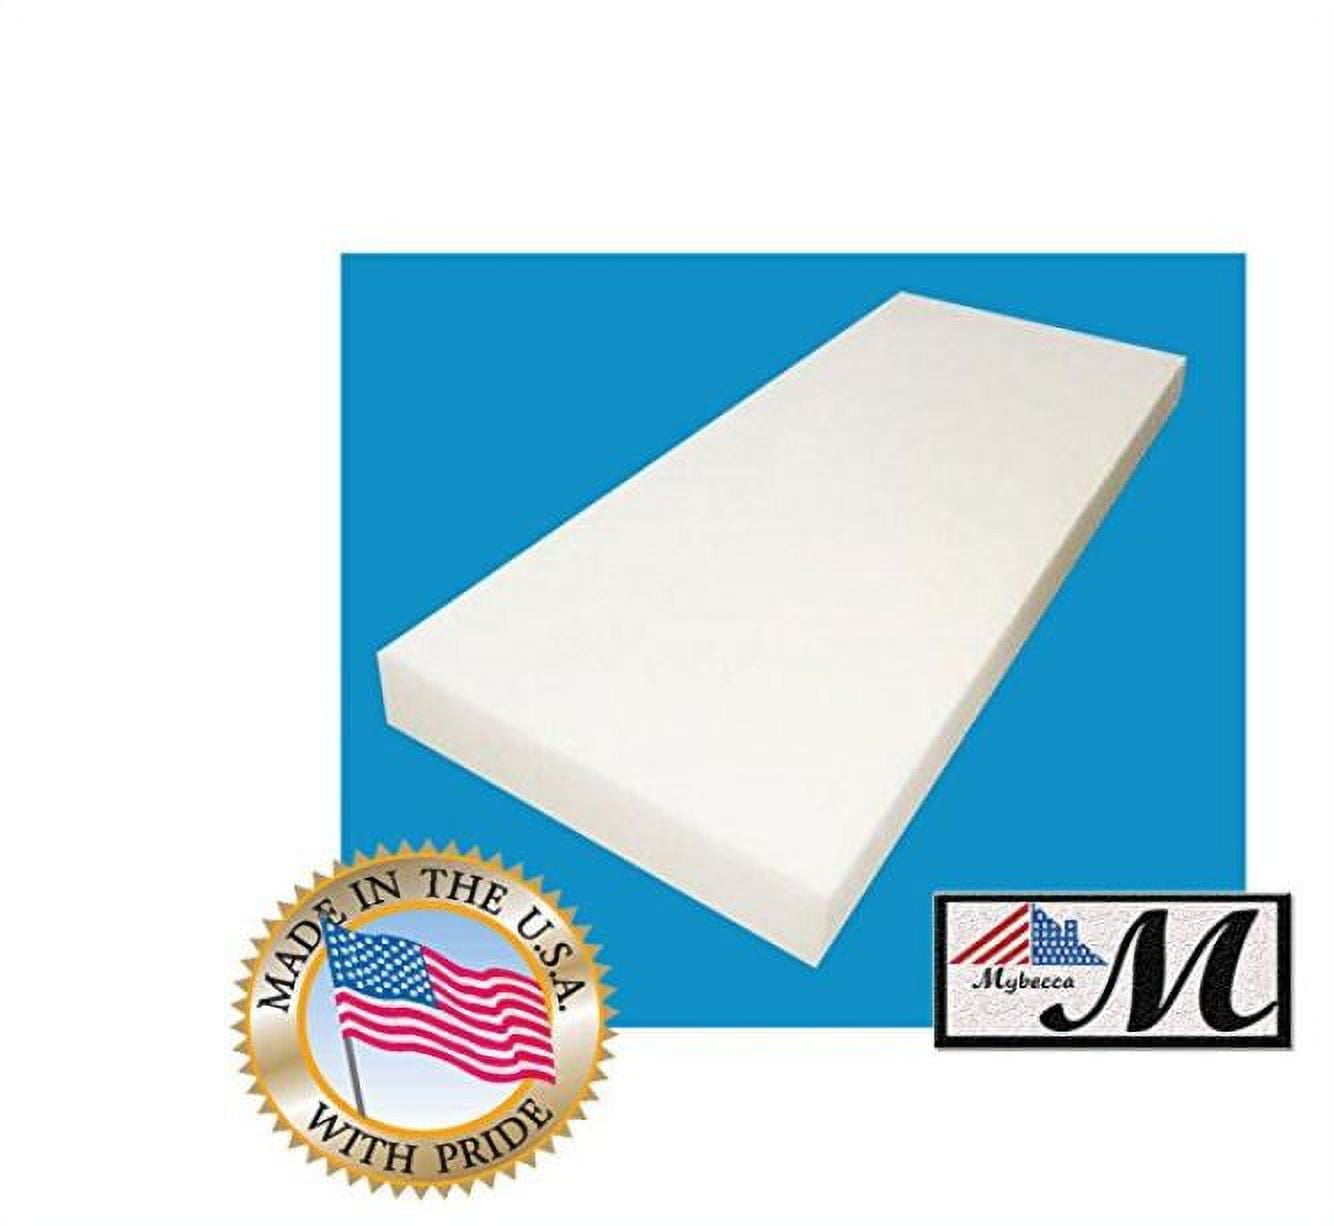 Mybecca 5 X 24x 72upholstery Foam Cushion High Density (Seat